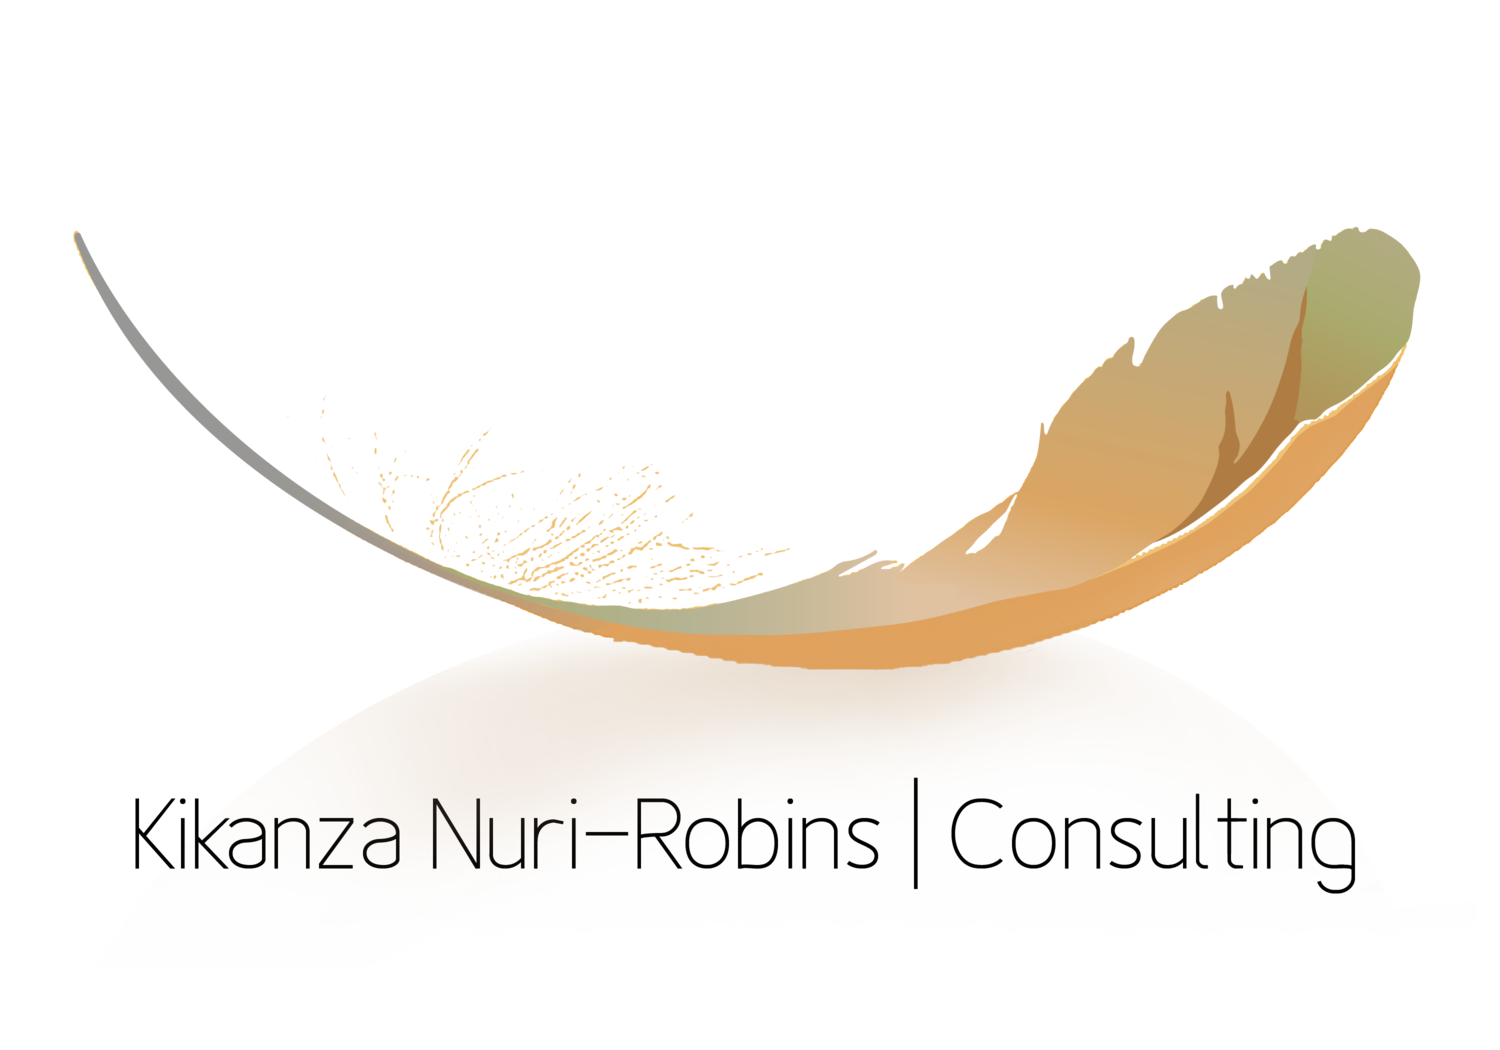 Kikanza Nuri-Robins | Consulting